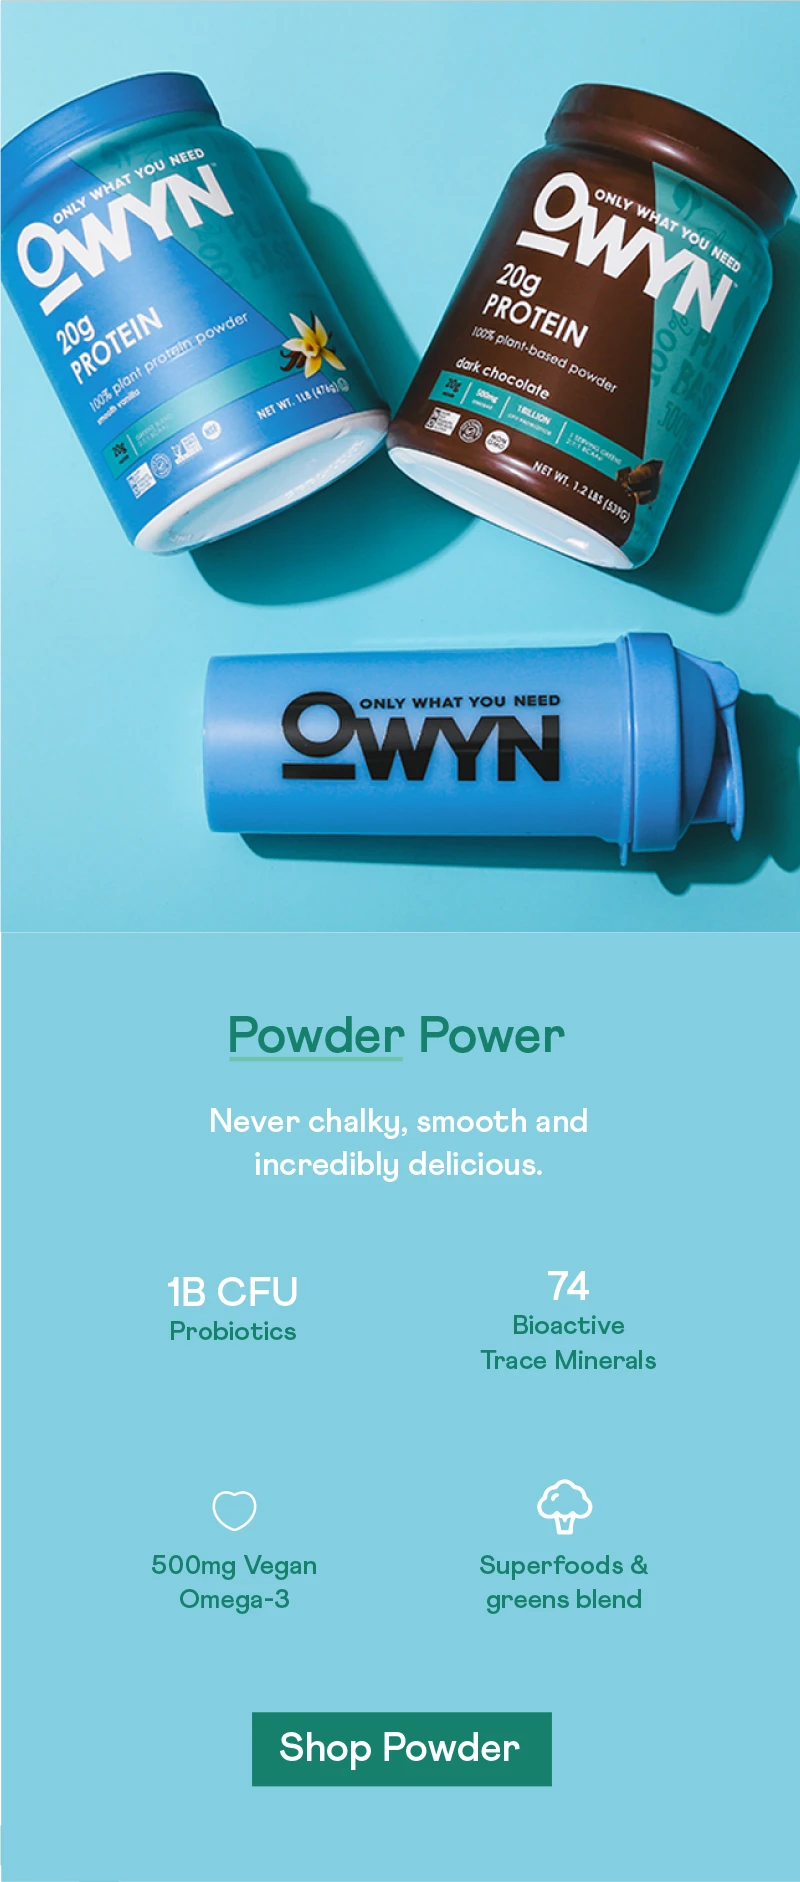 Powder power